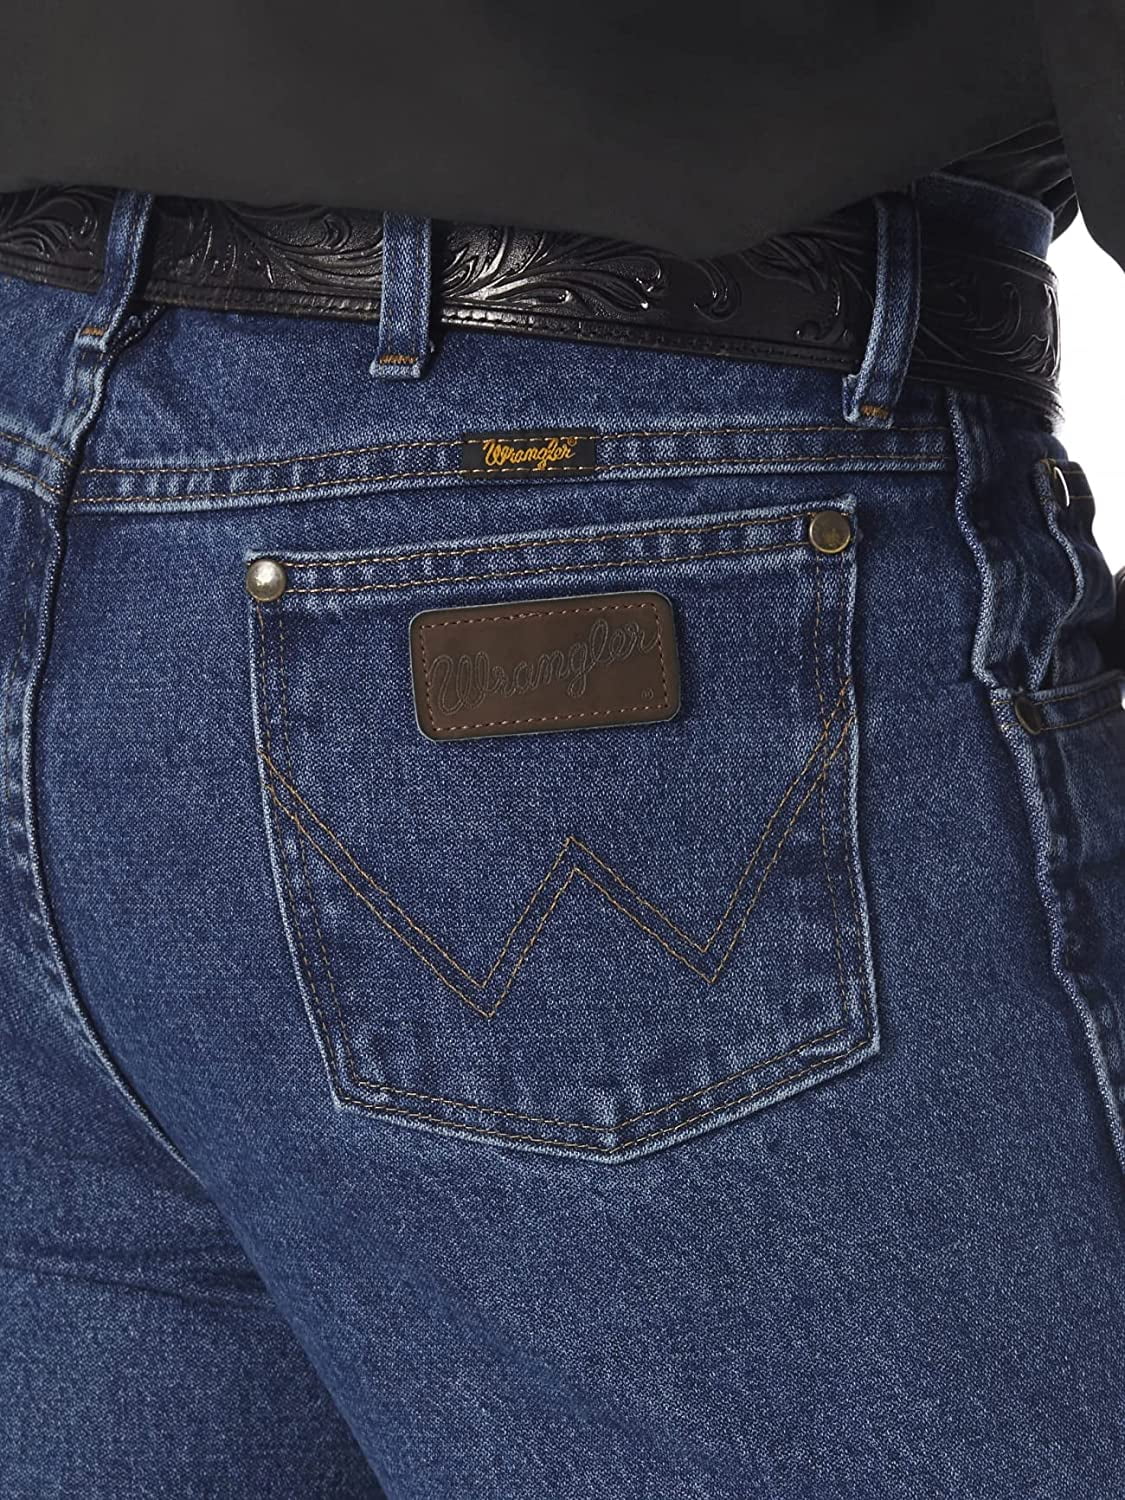 Wrangler Premium Stonewash Slim Jeans - Walmart.com